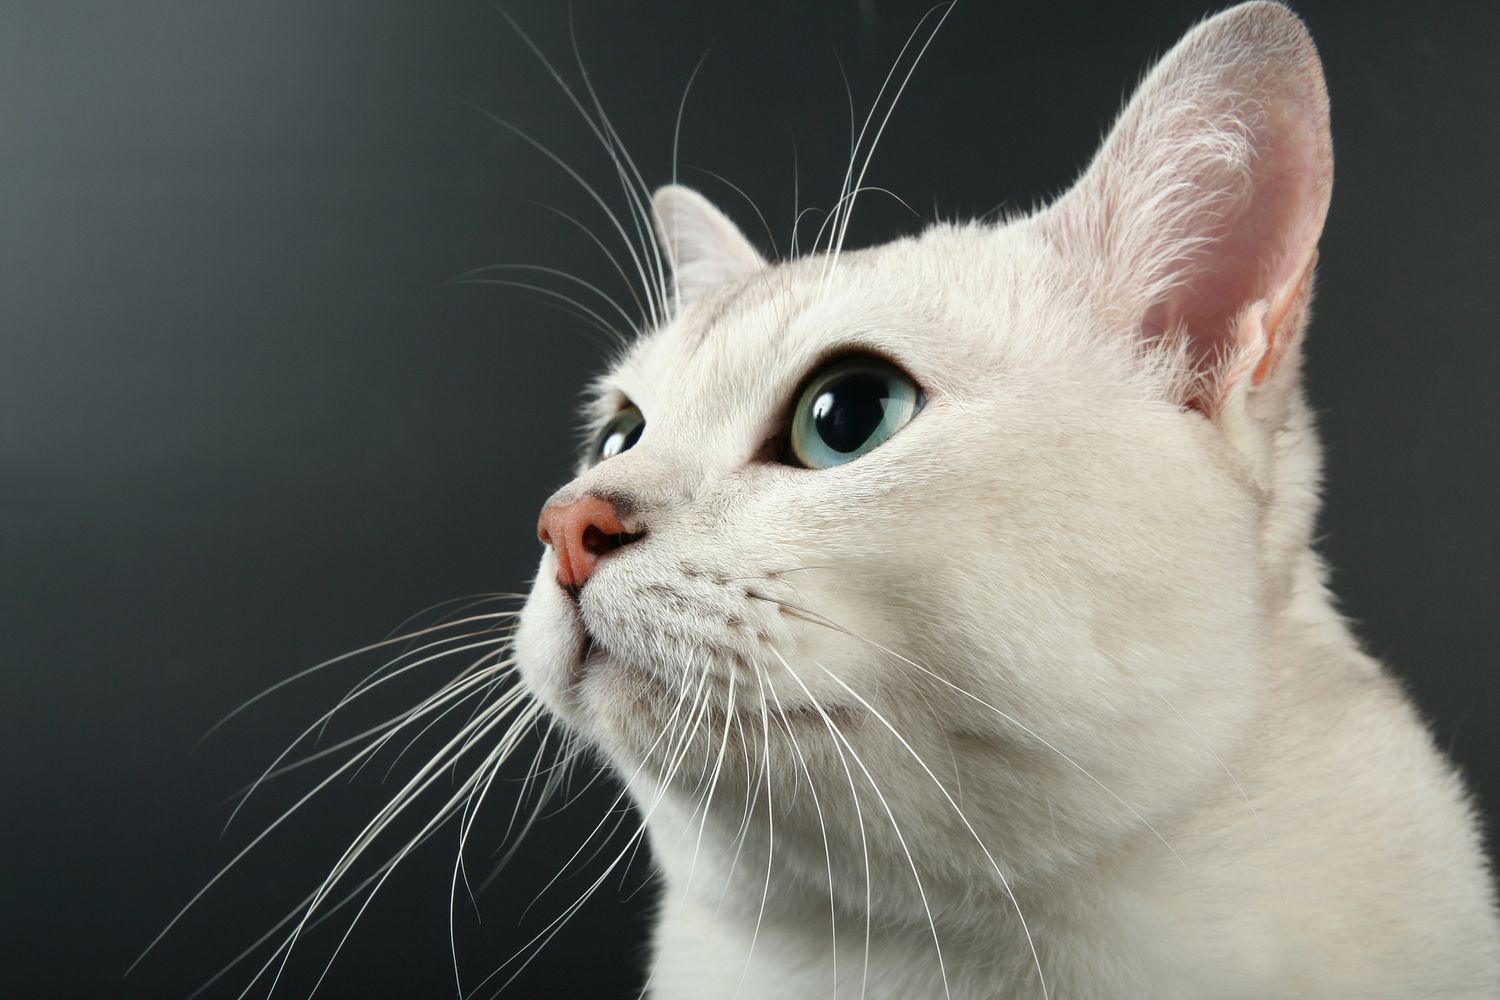 Cat Cafe Trivia Quiz Cat whiskers